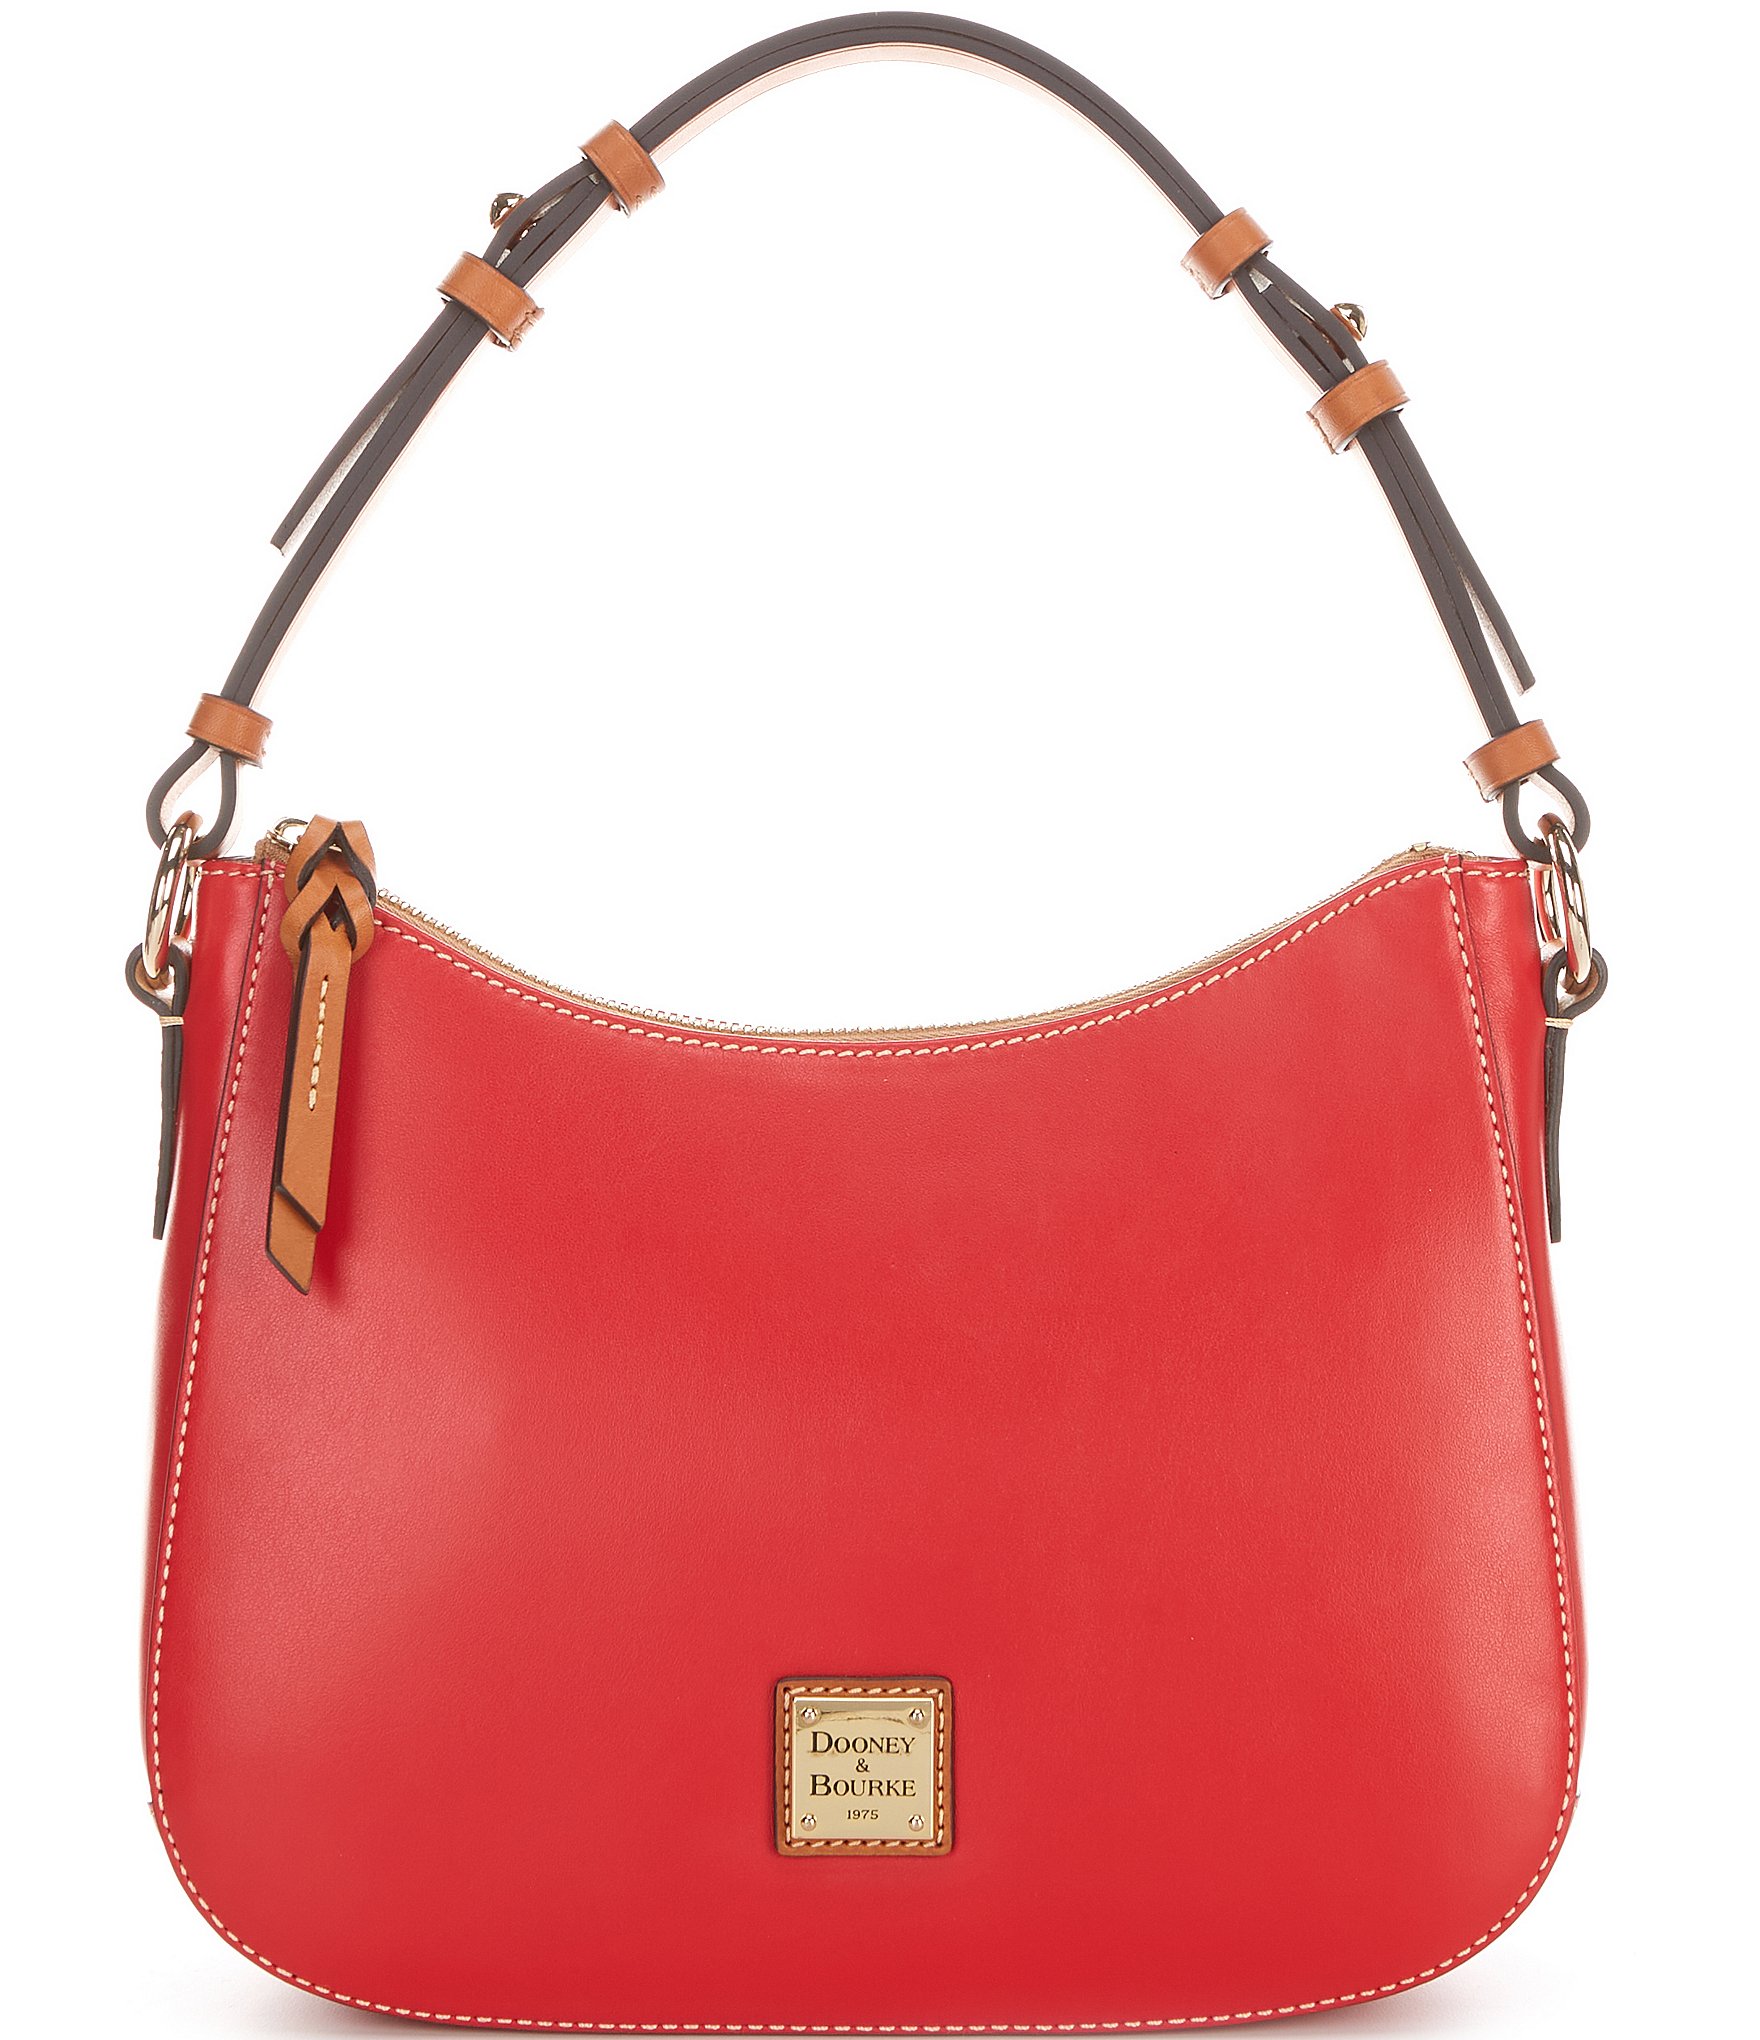 Dooney & Bourke Pebble Grain Leather Hobo Handbag Red